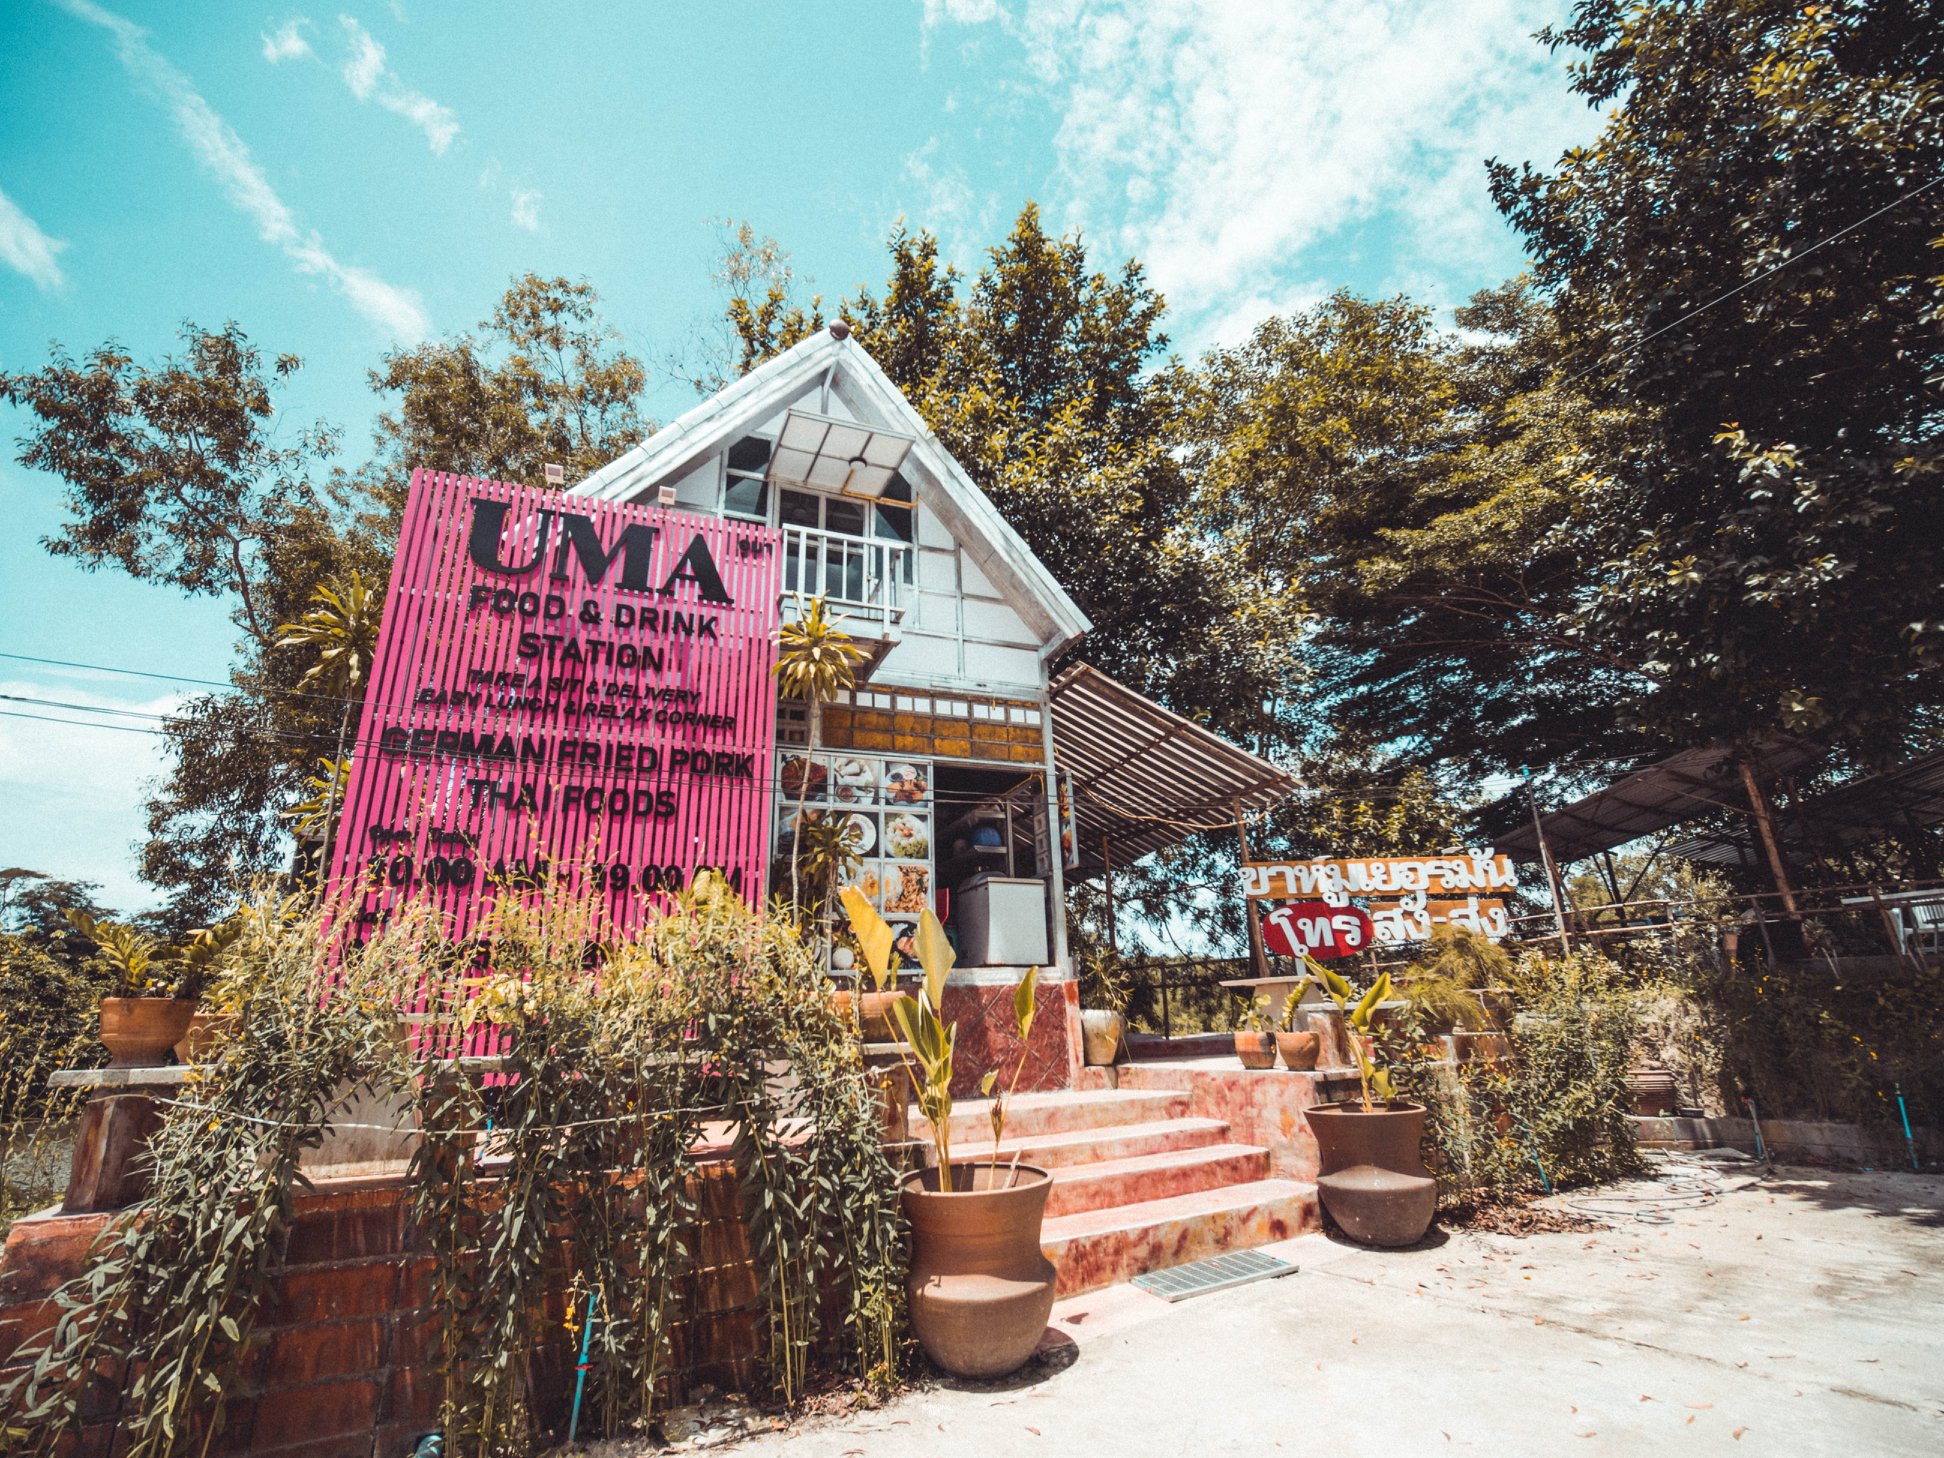 UMA Food & Drink Station